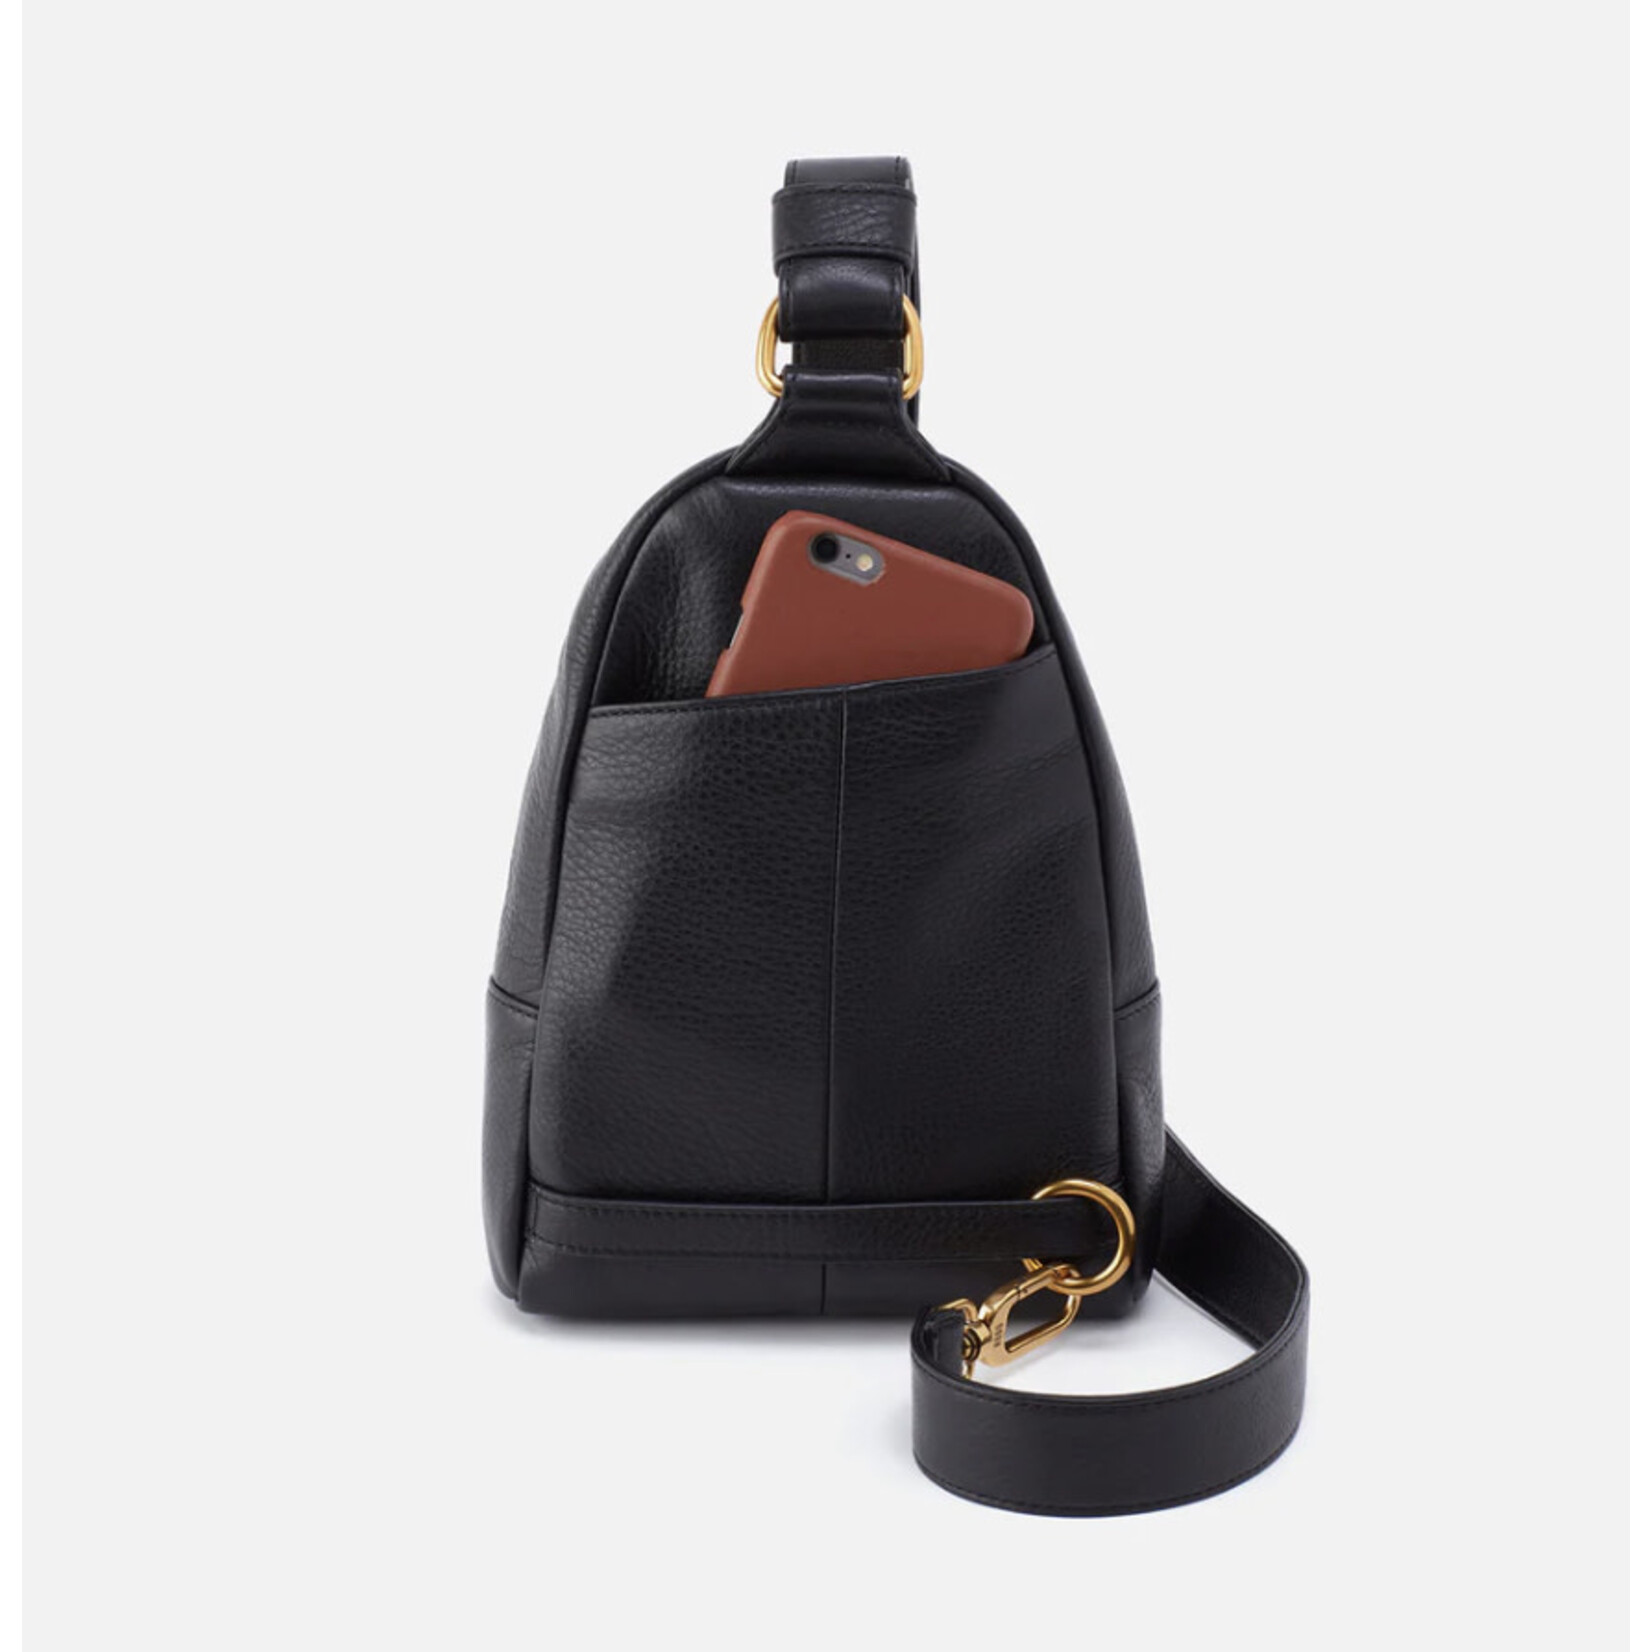 HOBO Fern Sling Bag - Pebbled Leather in Black